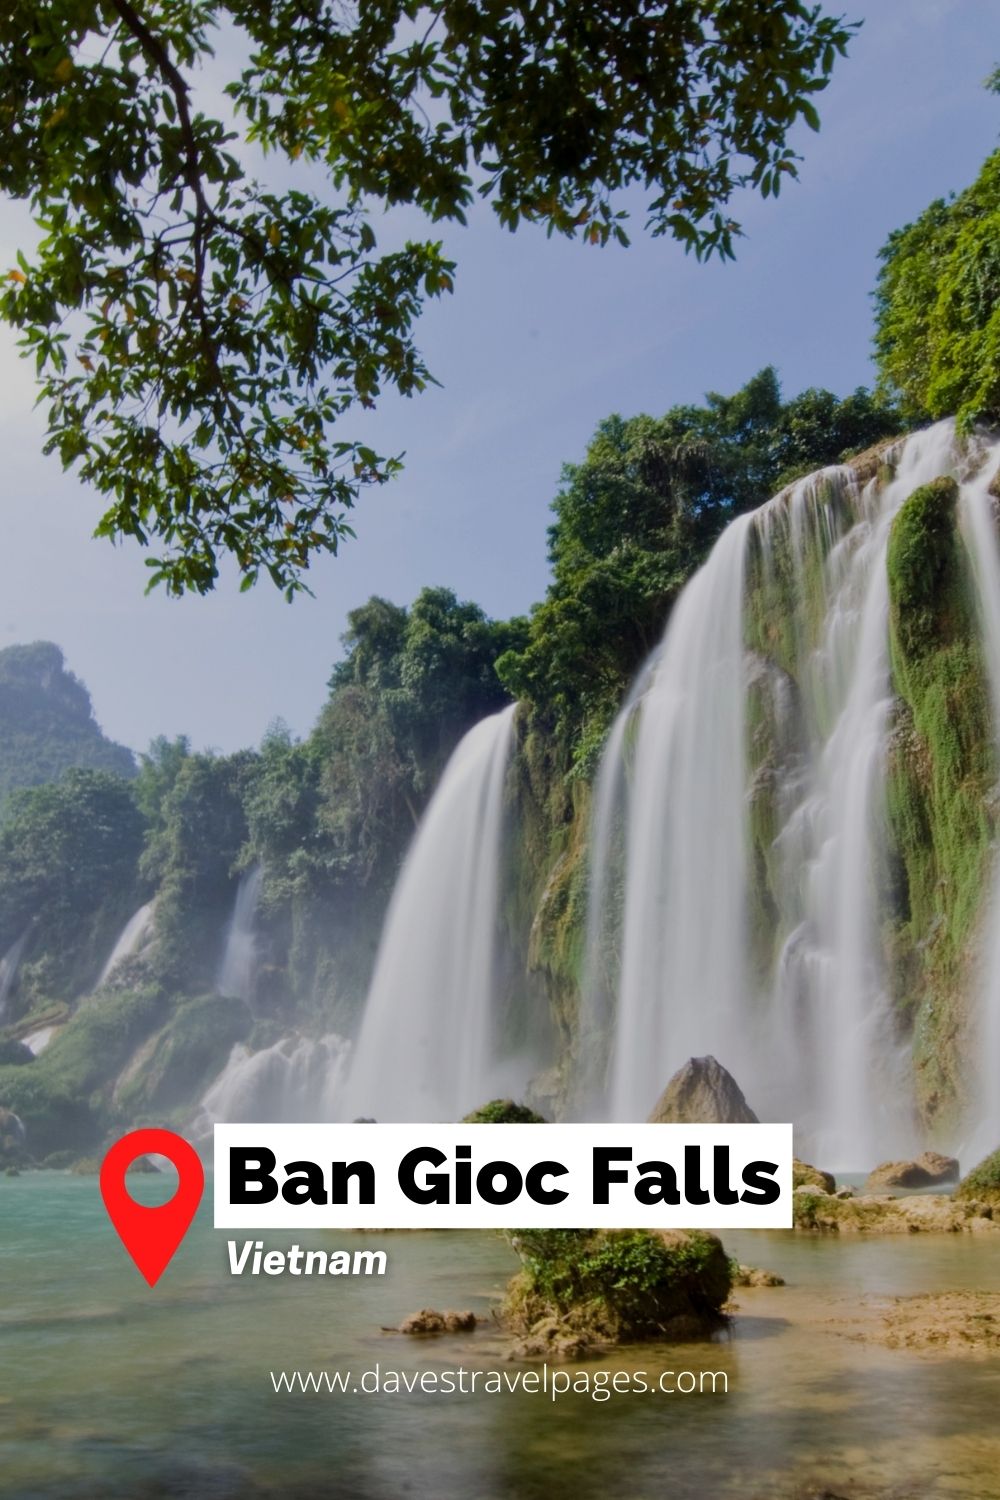 Ban Gioc Falls (Vietnam) - Impressive Natural Landmark